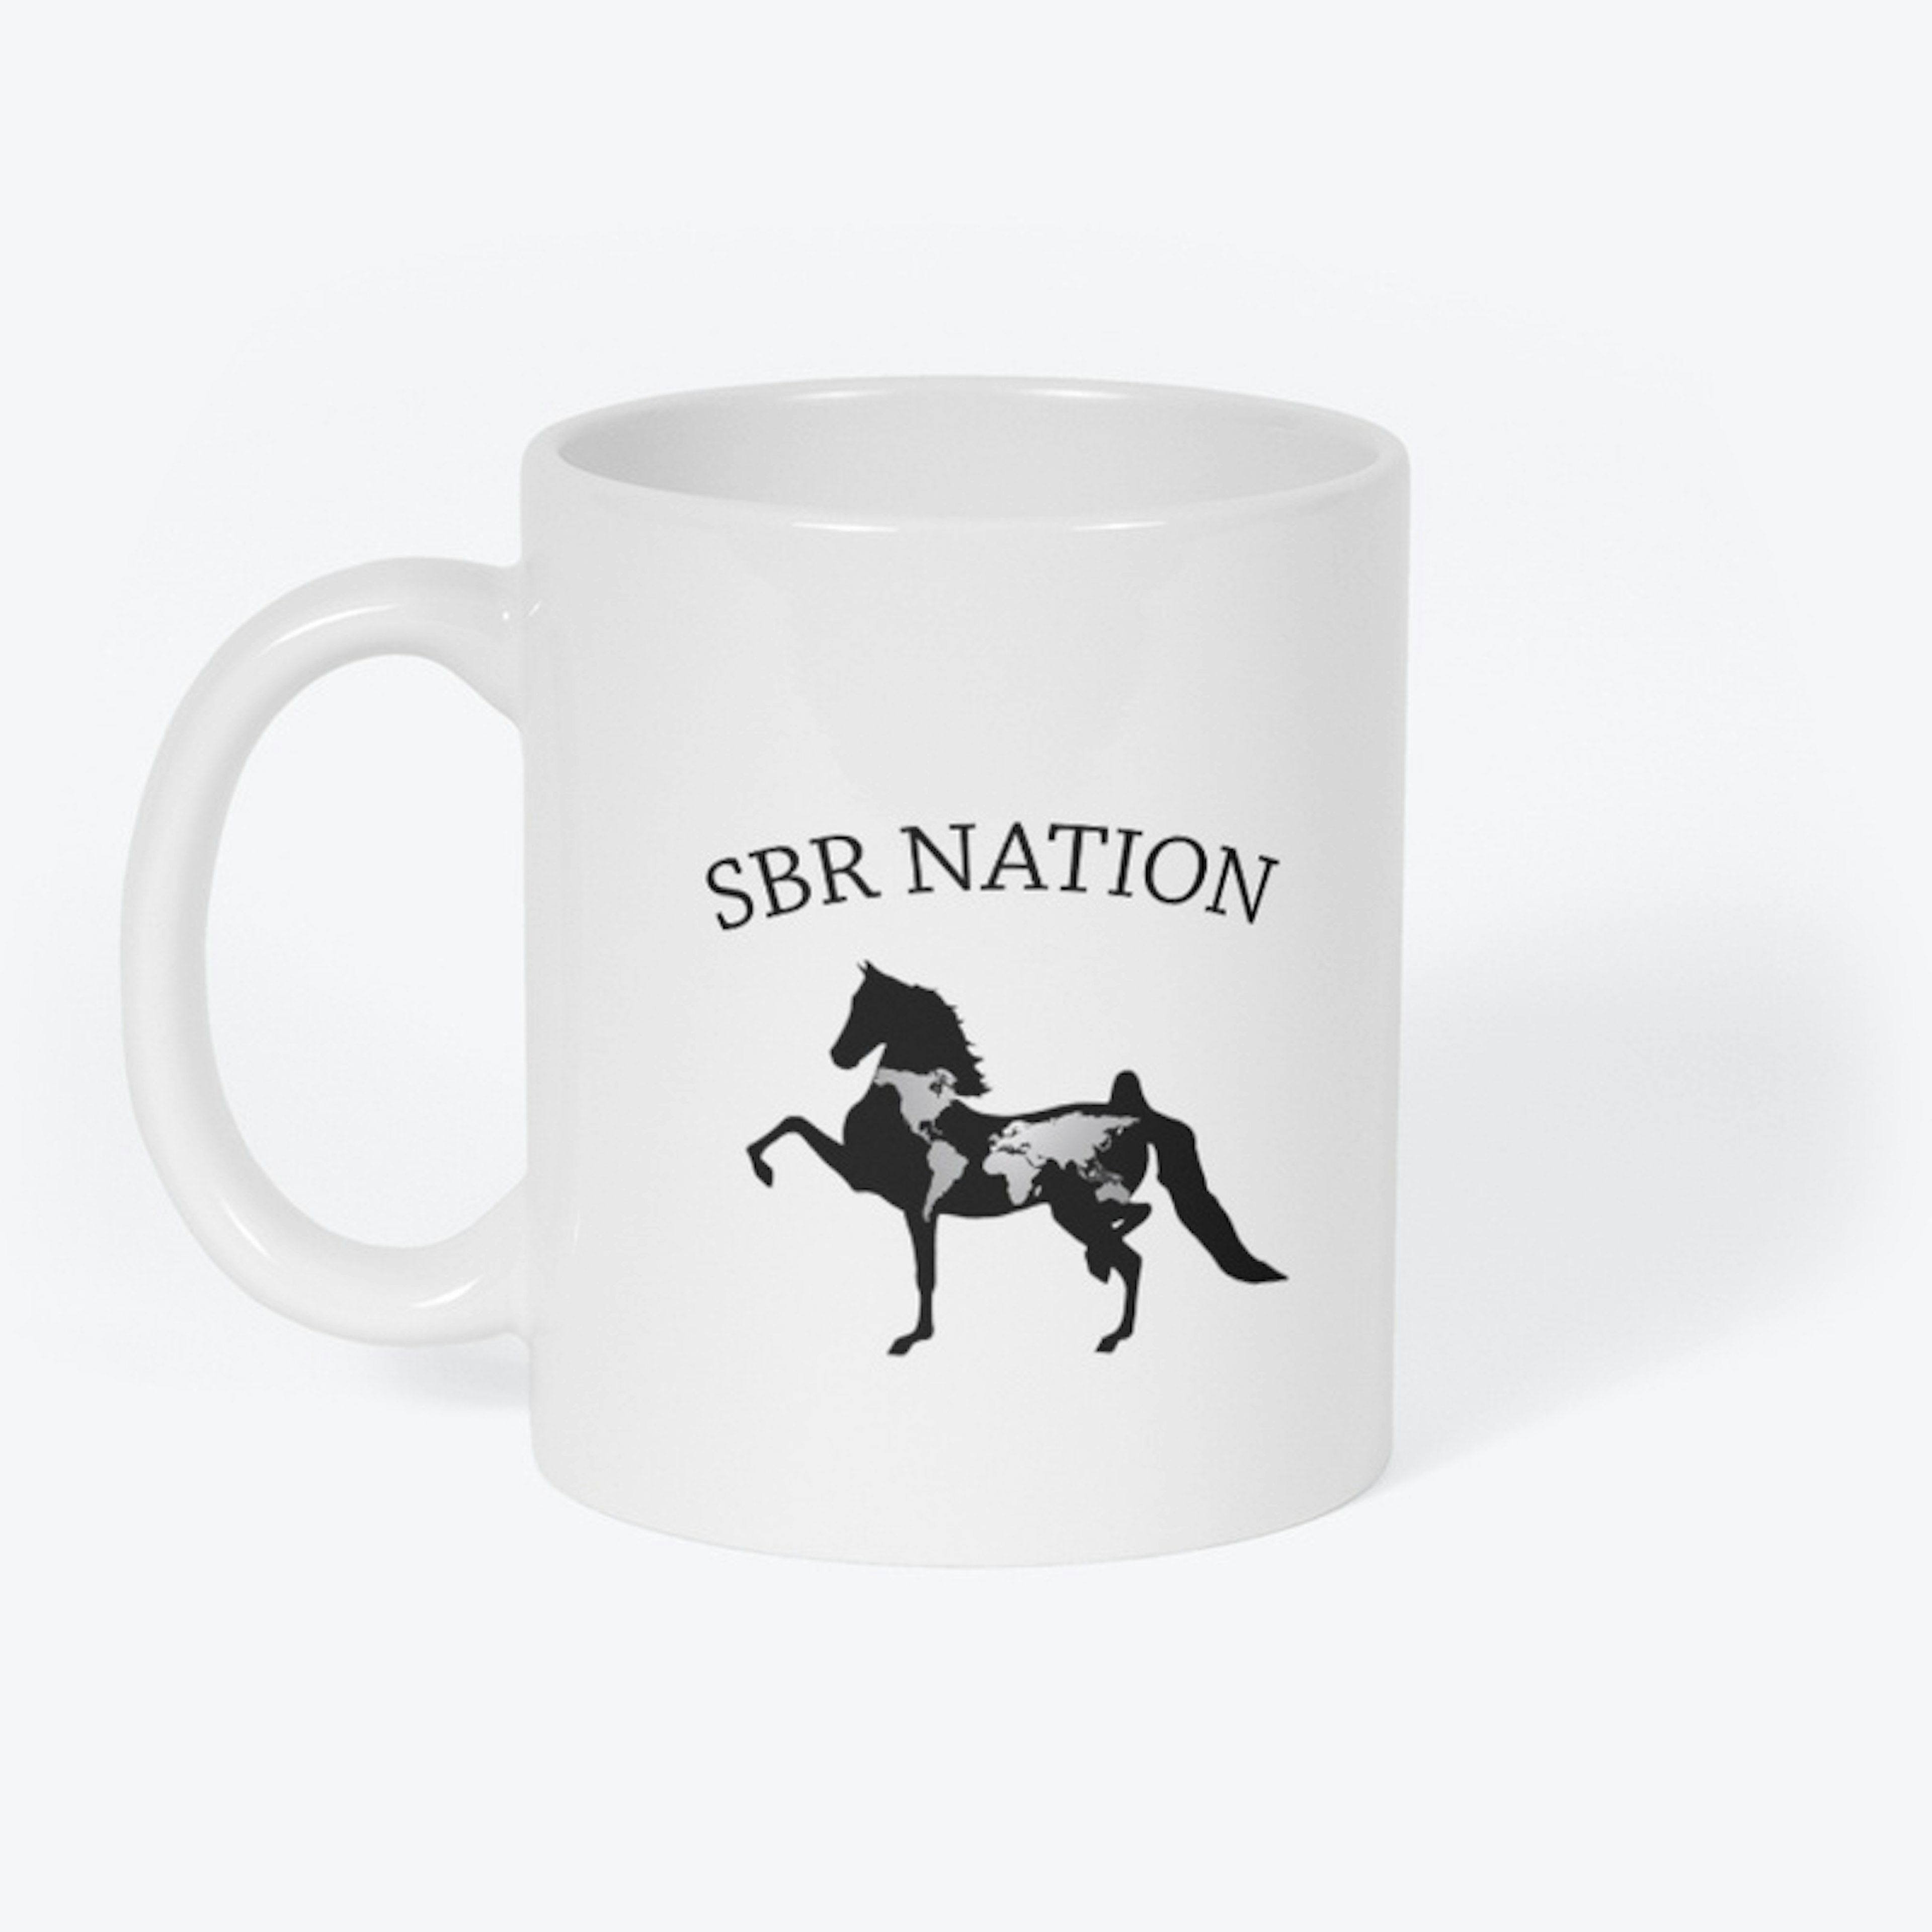 SBR Nation Mug!